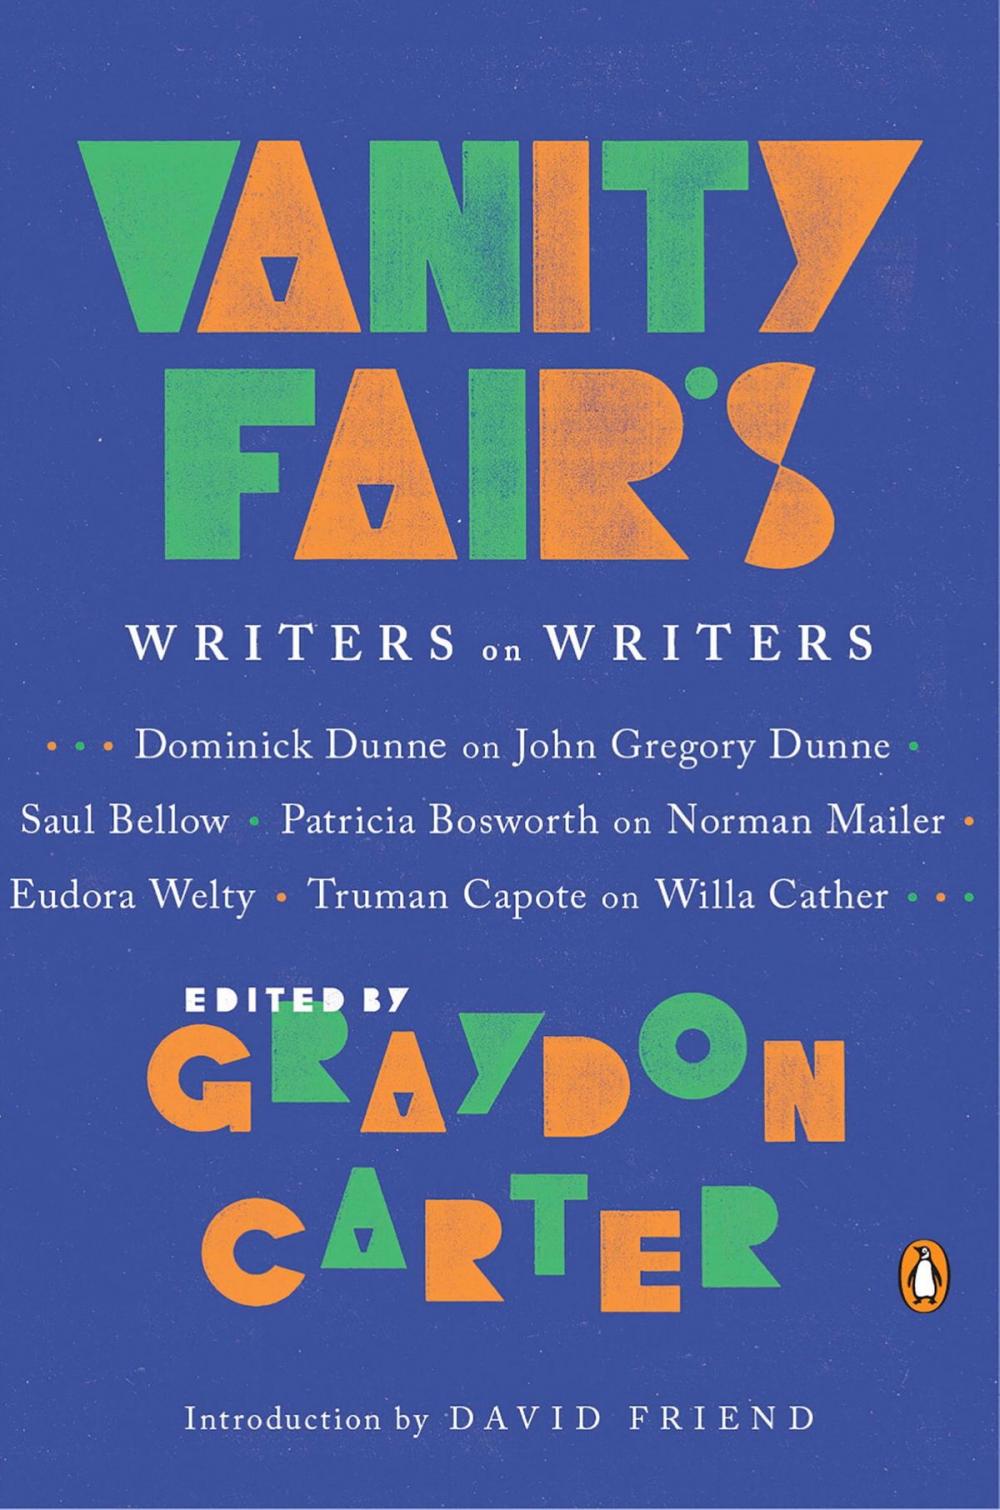 Big bigCover of Vanity Fair's Writers on Writers